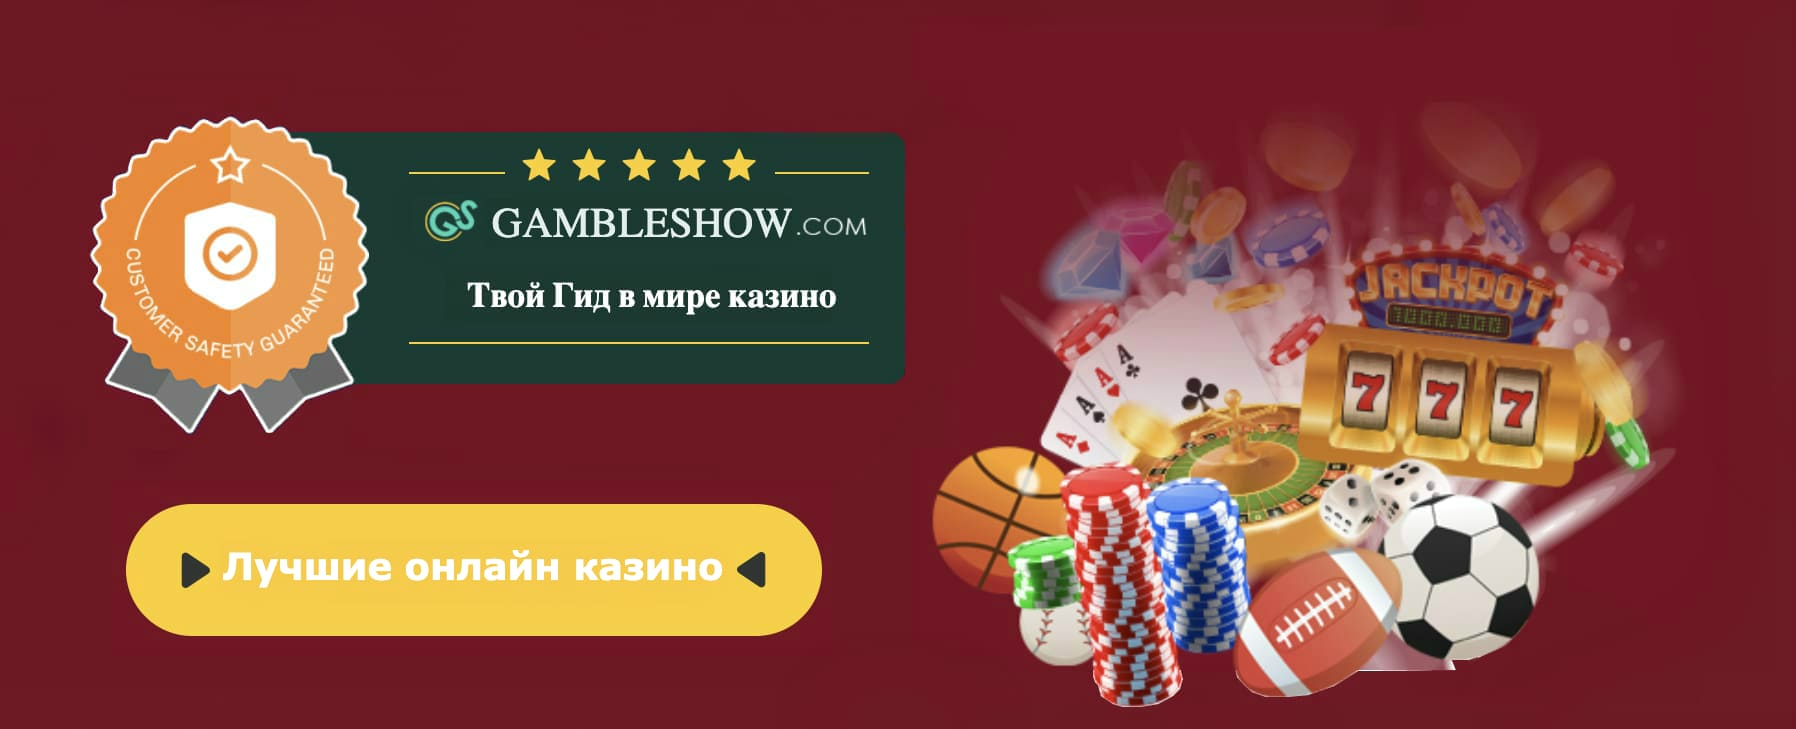 Online casino bônus nj